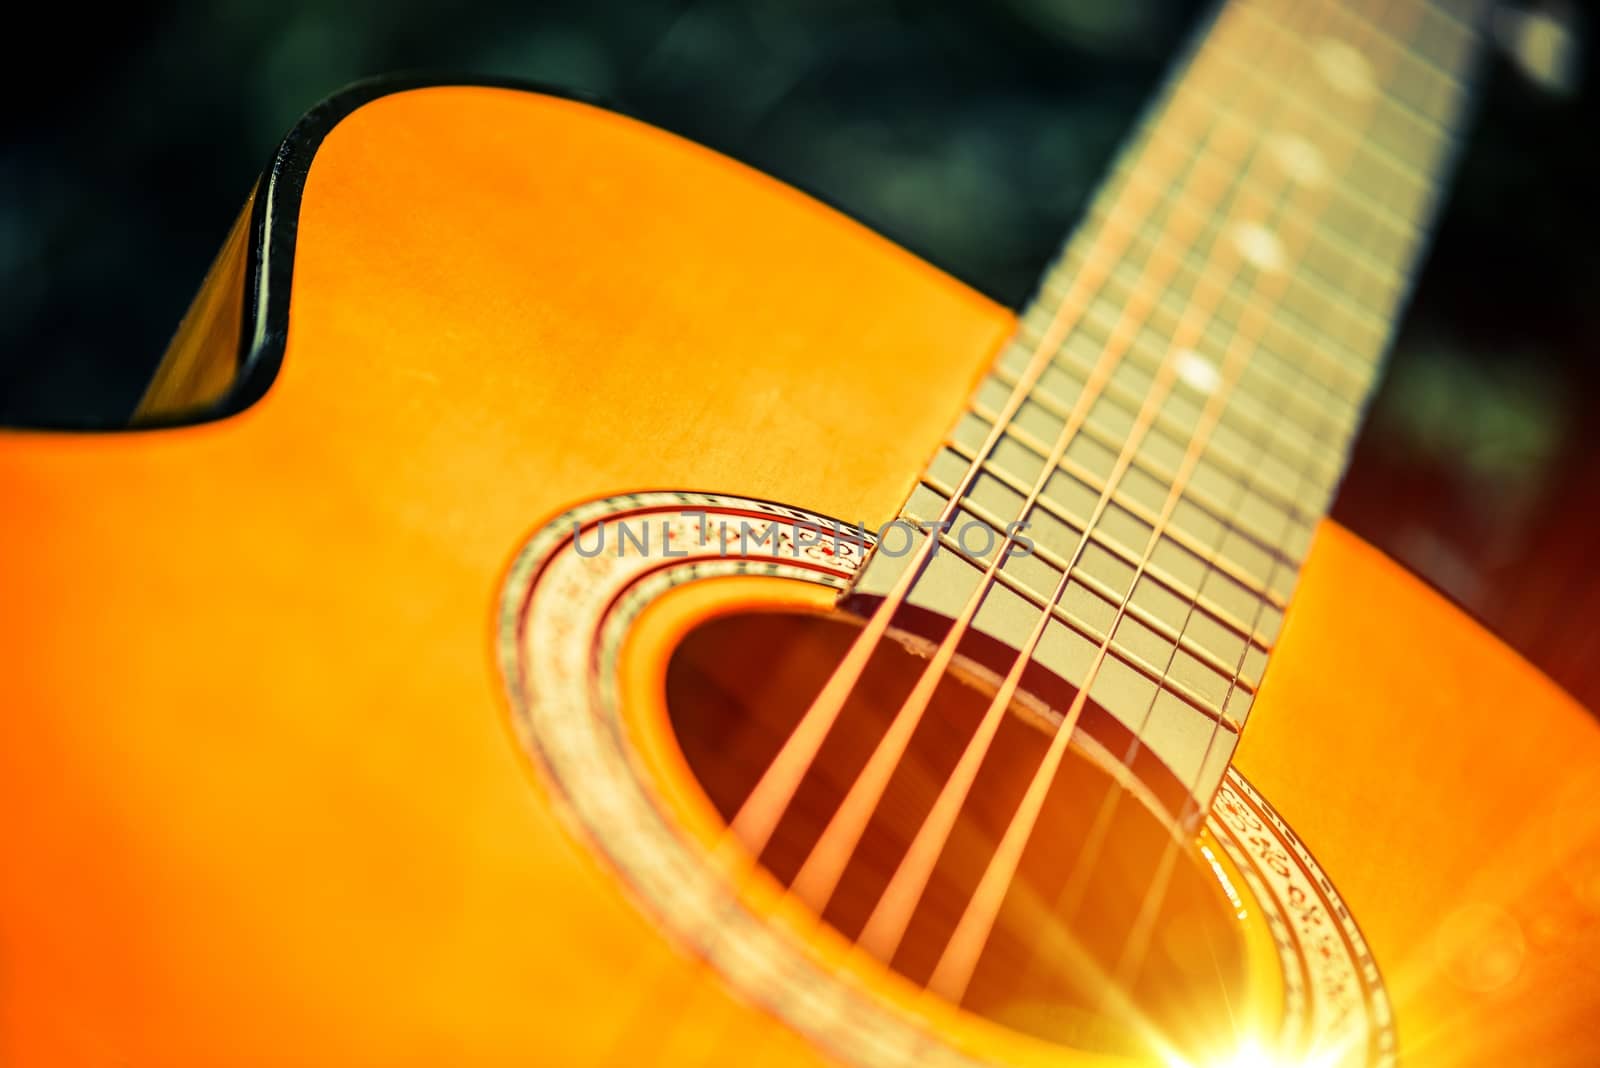 Acoustic Wooden Guitar Closeup Photo. Guitar Playing Concept.